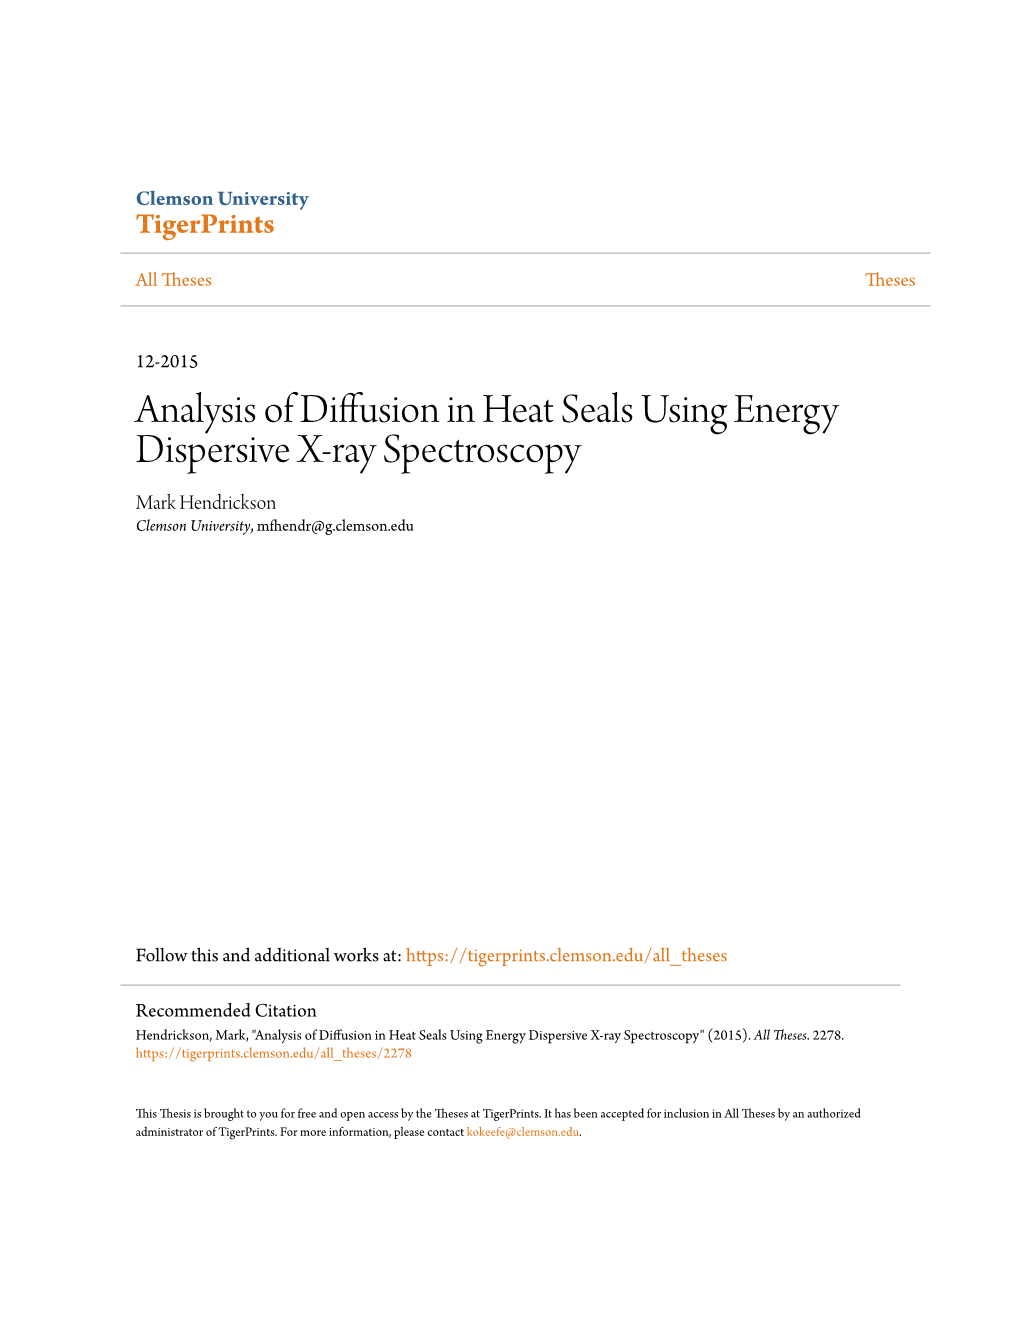 Analysis of Diffusion in Heat Seals Using Energy Dispersive X-Ray Spectroscopy Mark Hendrickson Clemson University, Mfhendr@G.Clemson.Edu